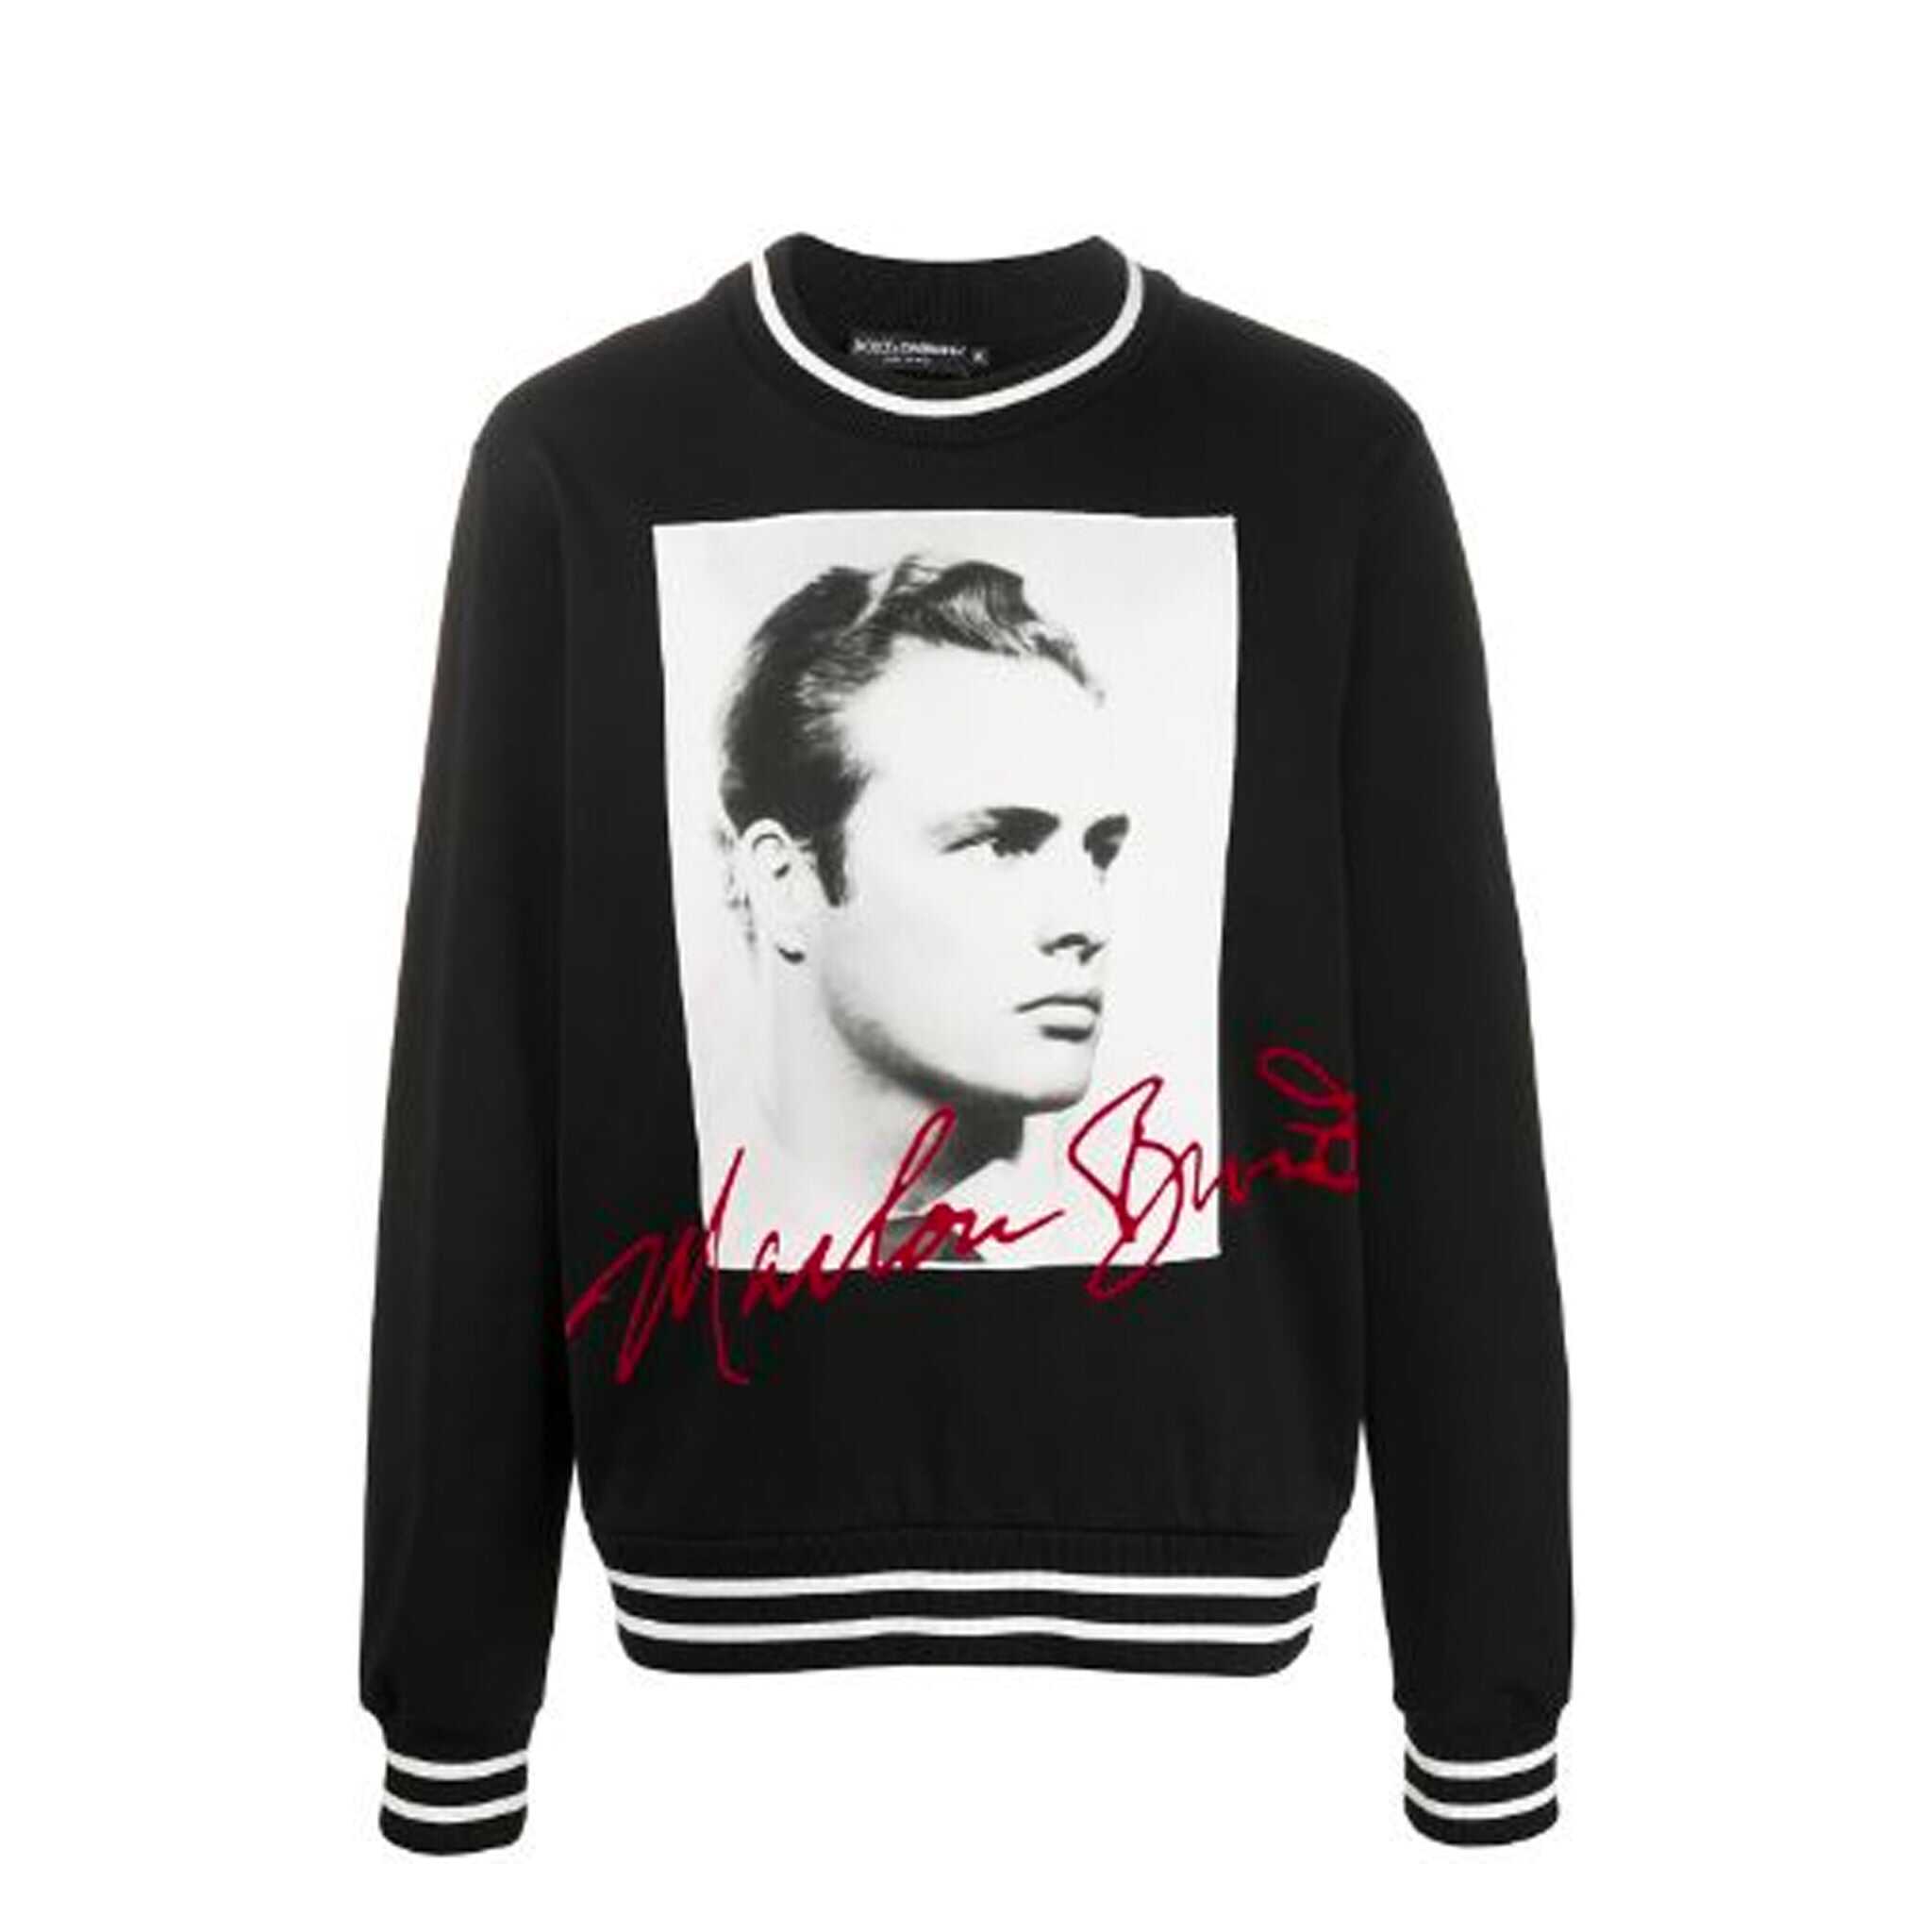 Dolce & Gabbana Marlon Brando Sweatshirt Black